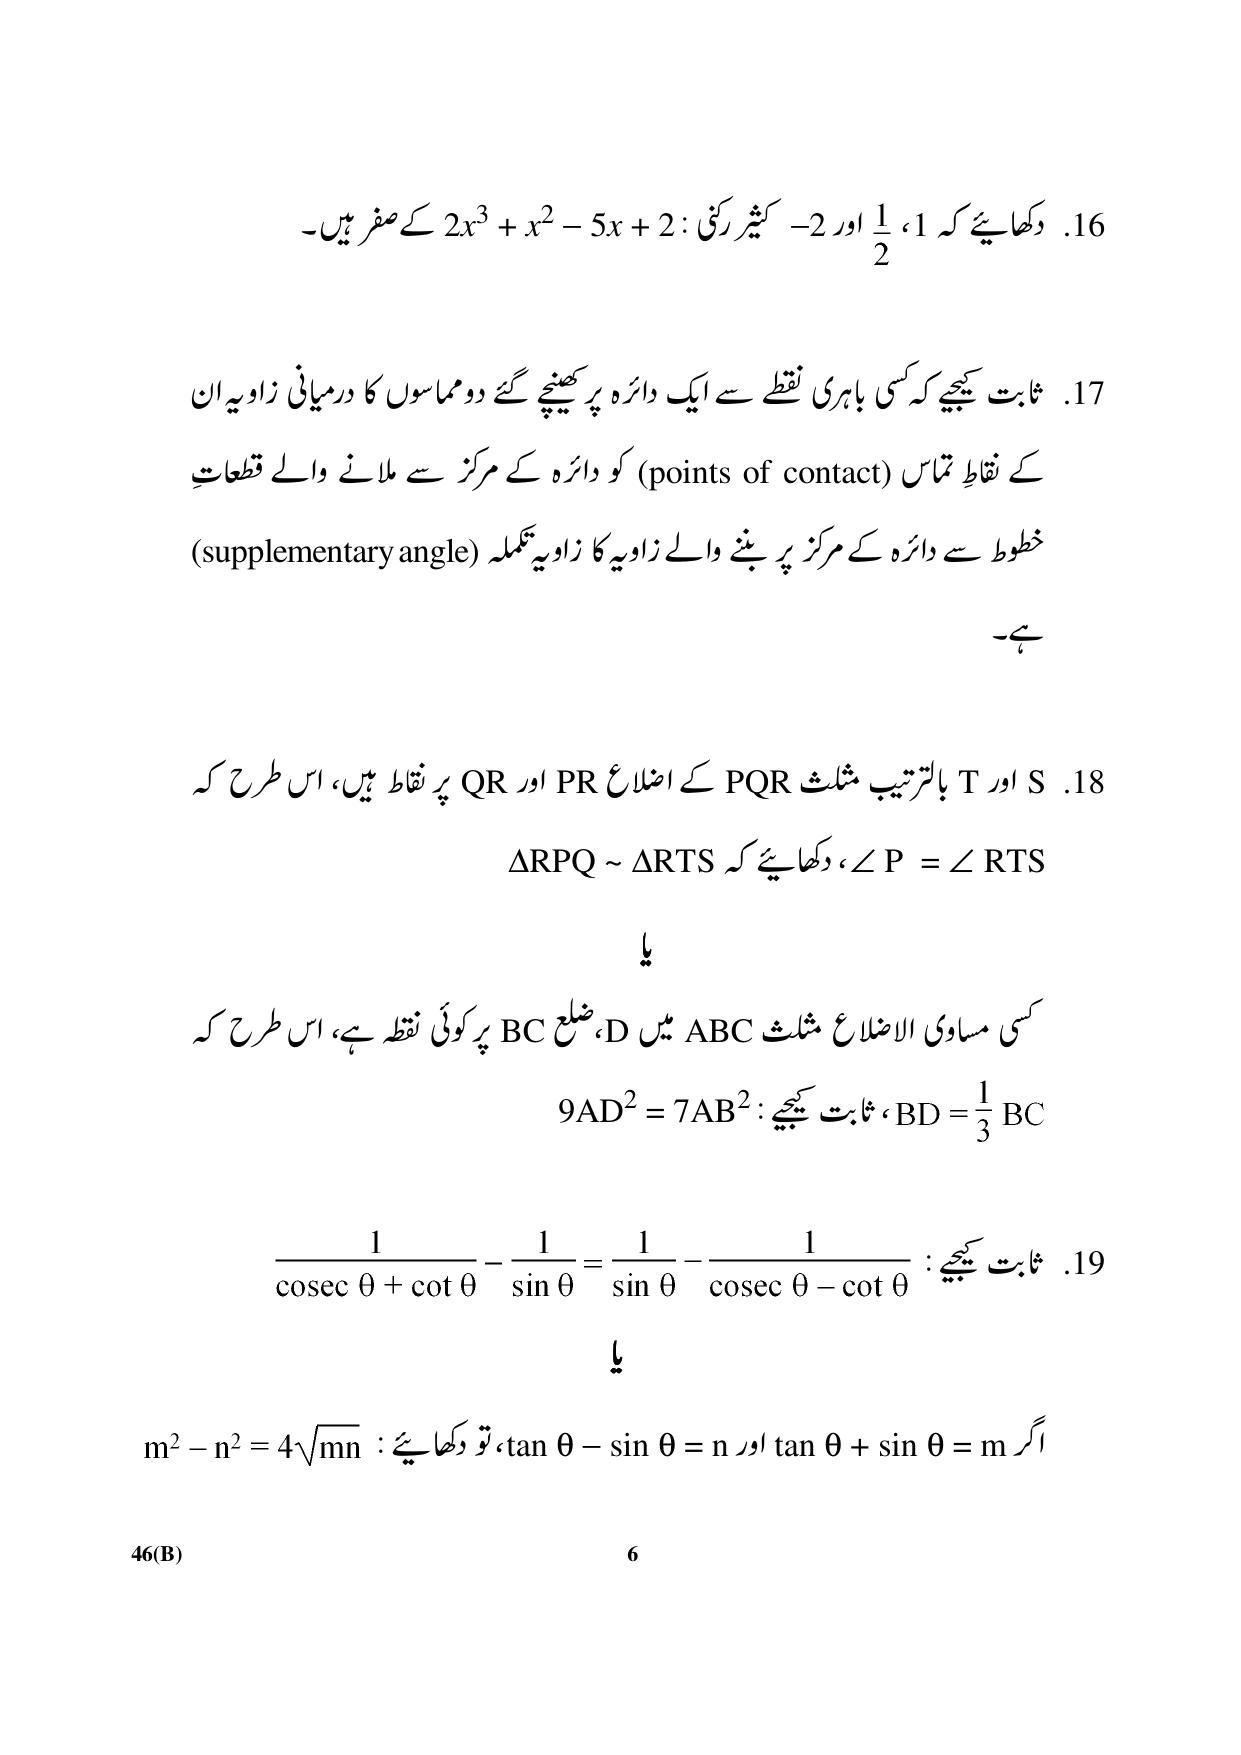 CBSE Class 10 46(B) Maths (For Blind) Urdu Version 2018 Question Paper - Page 6